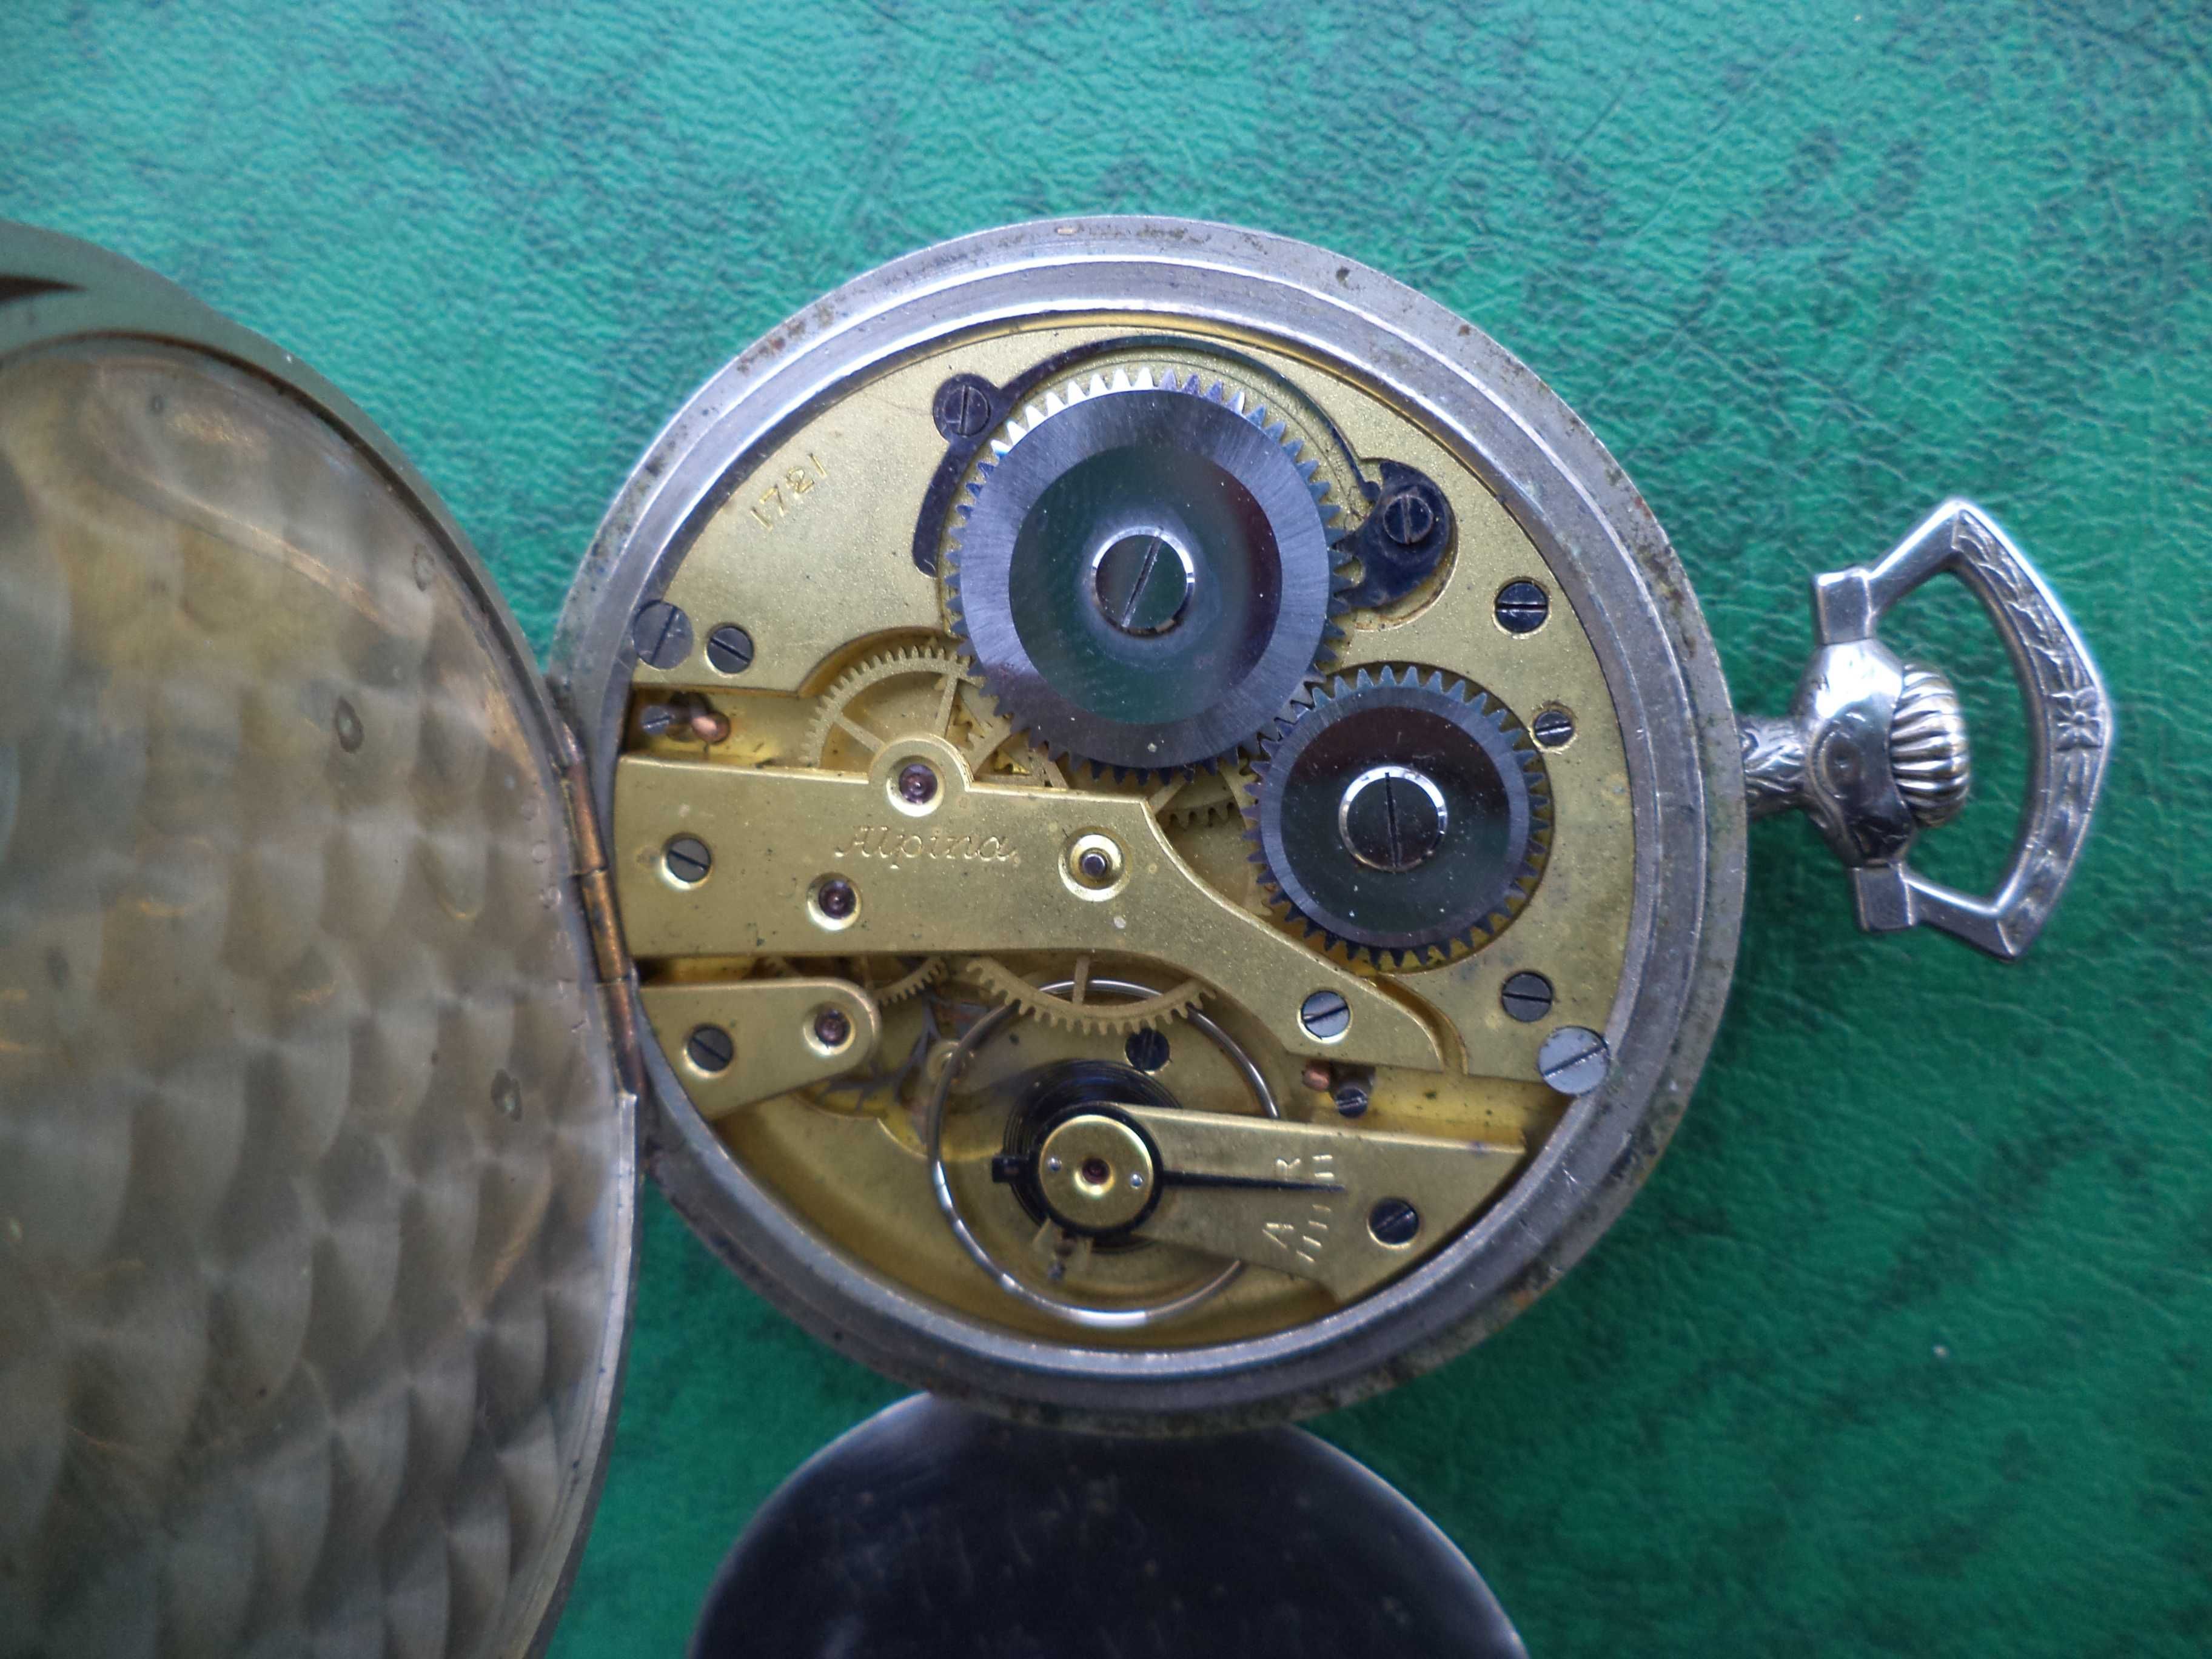 Ceas de buzunar vechi Alpina vând - schimb